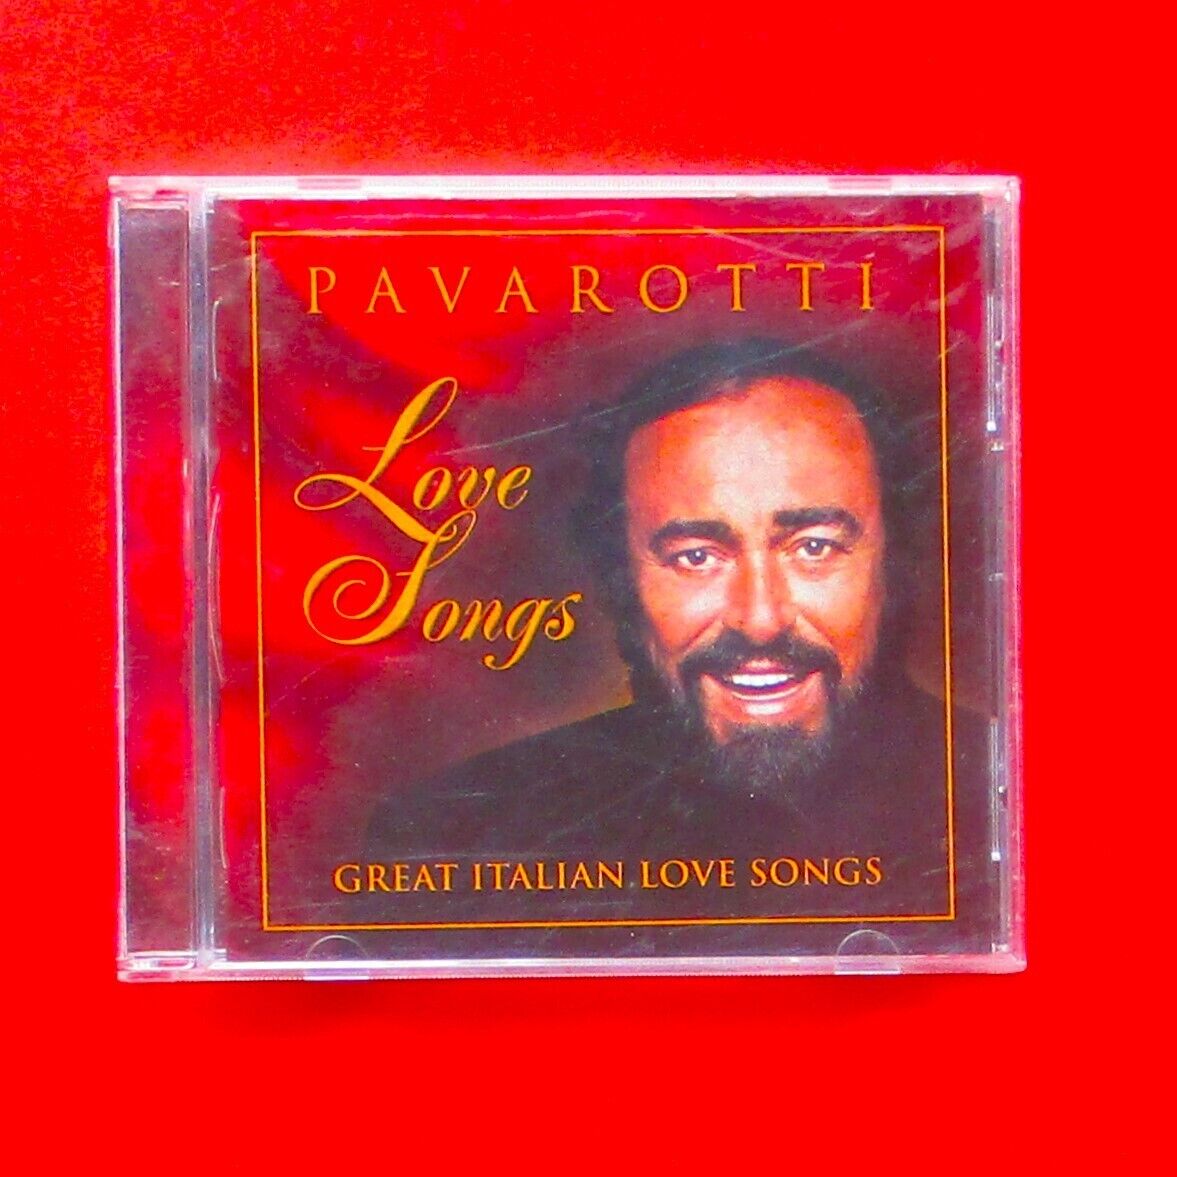 Pavarotti Love Songs 1999 Australian CD Album